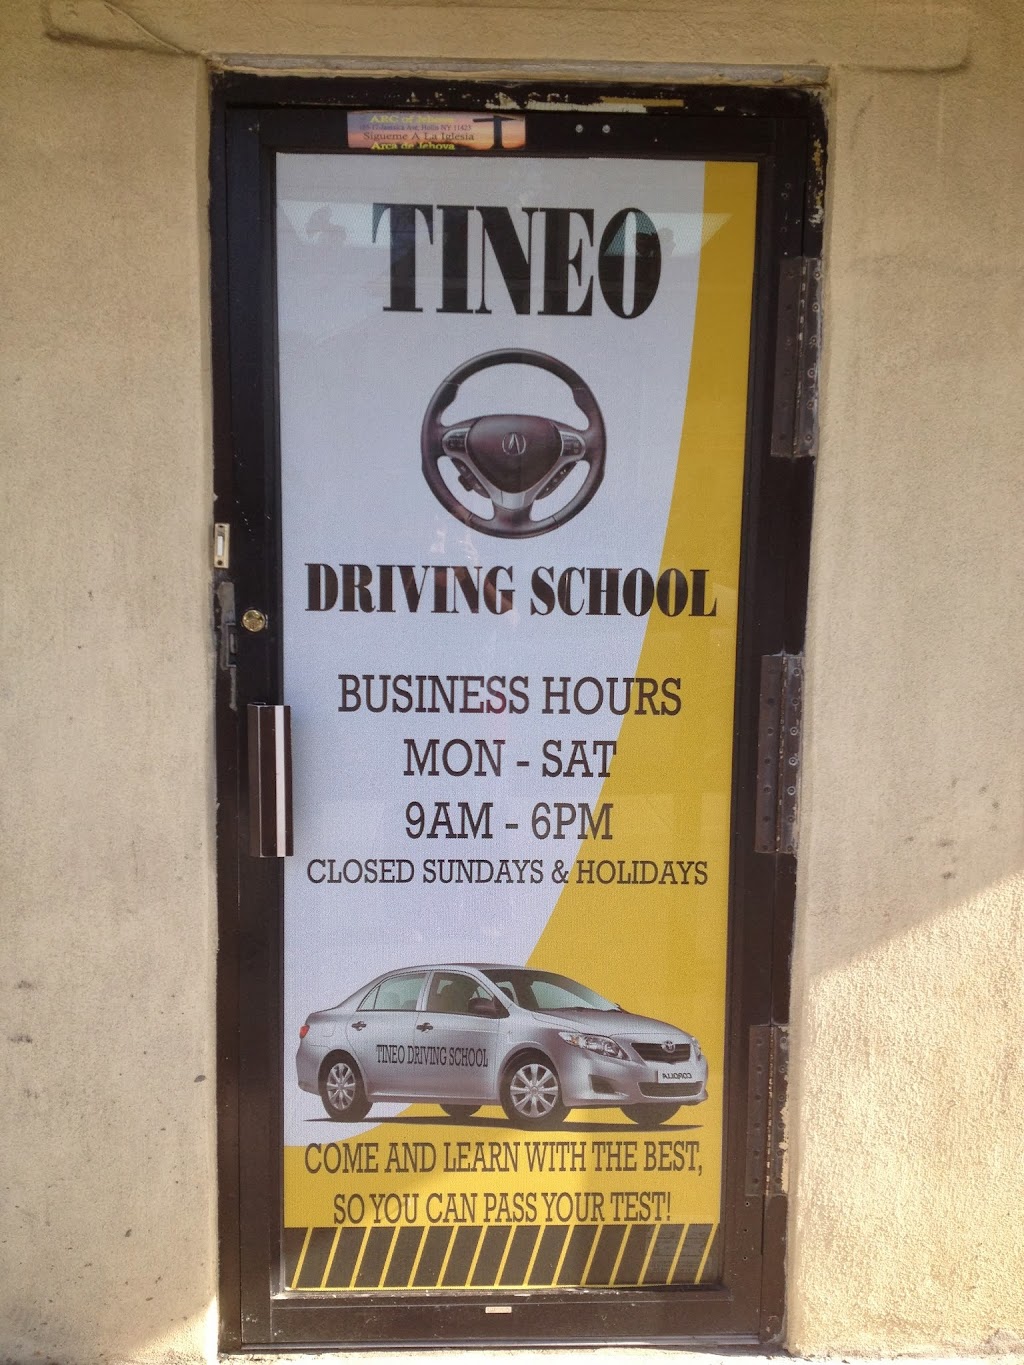 Tineo Driving School | 856 New Lots Ave, Brooklyn, NY 11208 | Phone: (718) 649-4499